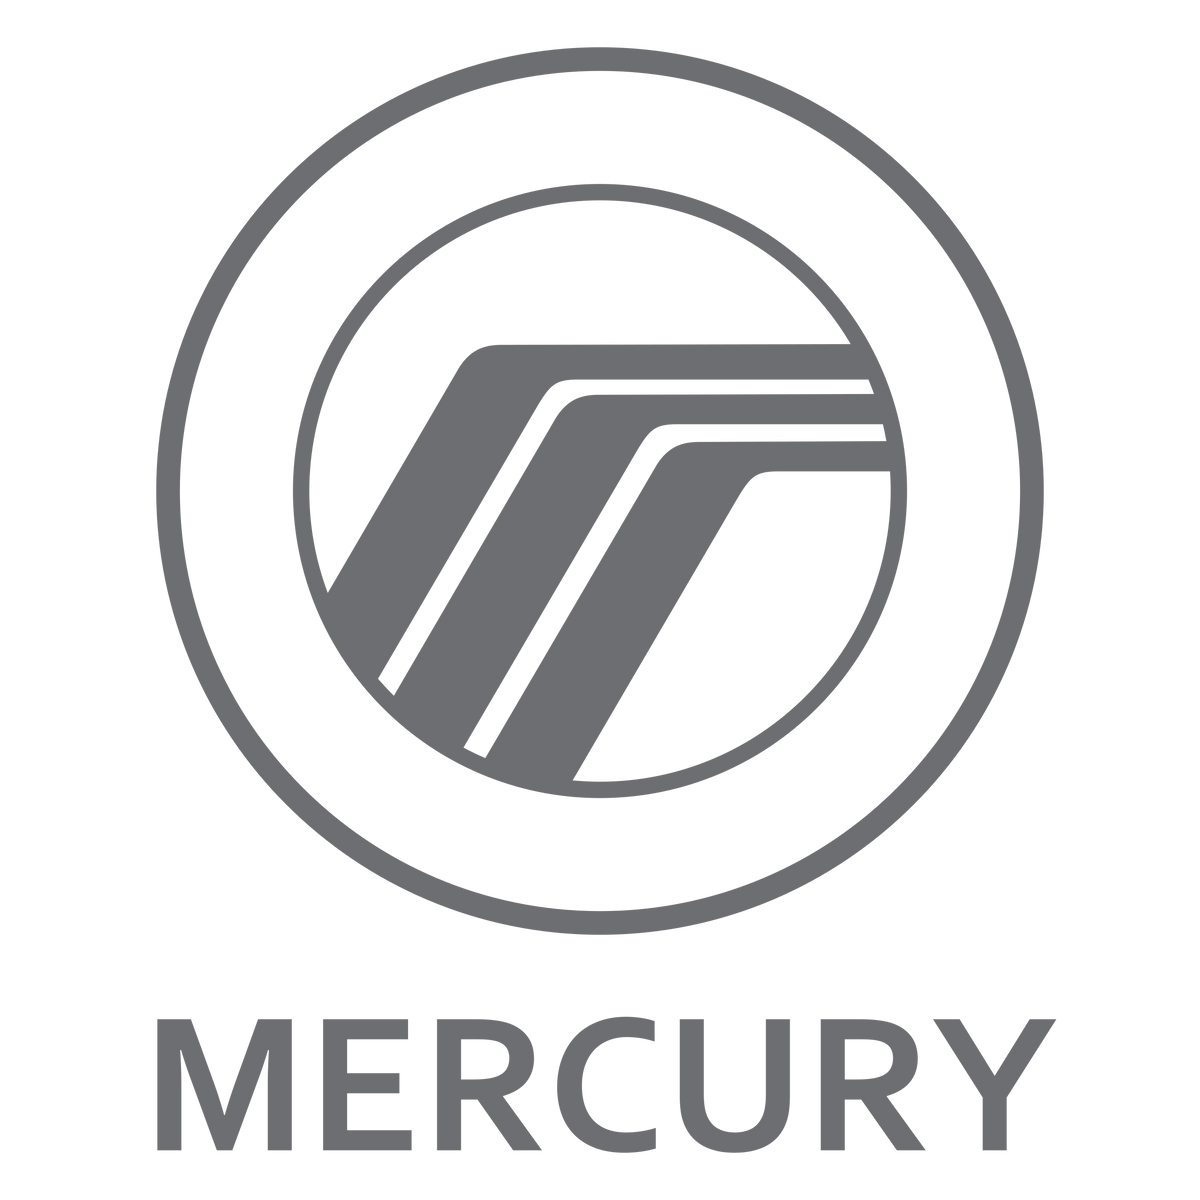 Mercury llavero logo negro-medida 41mm 